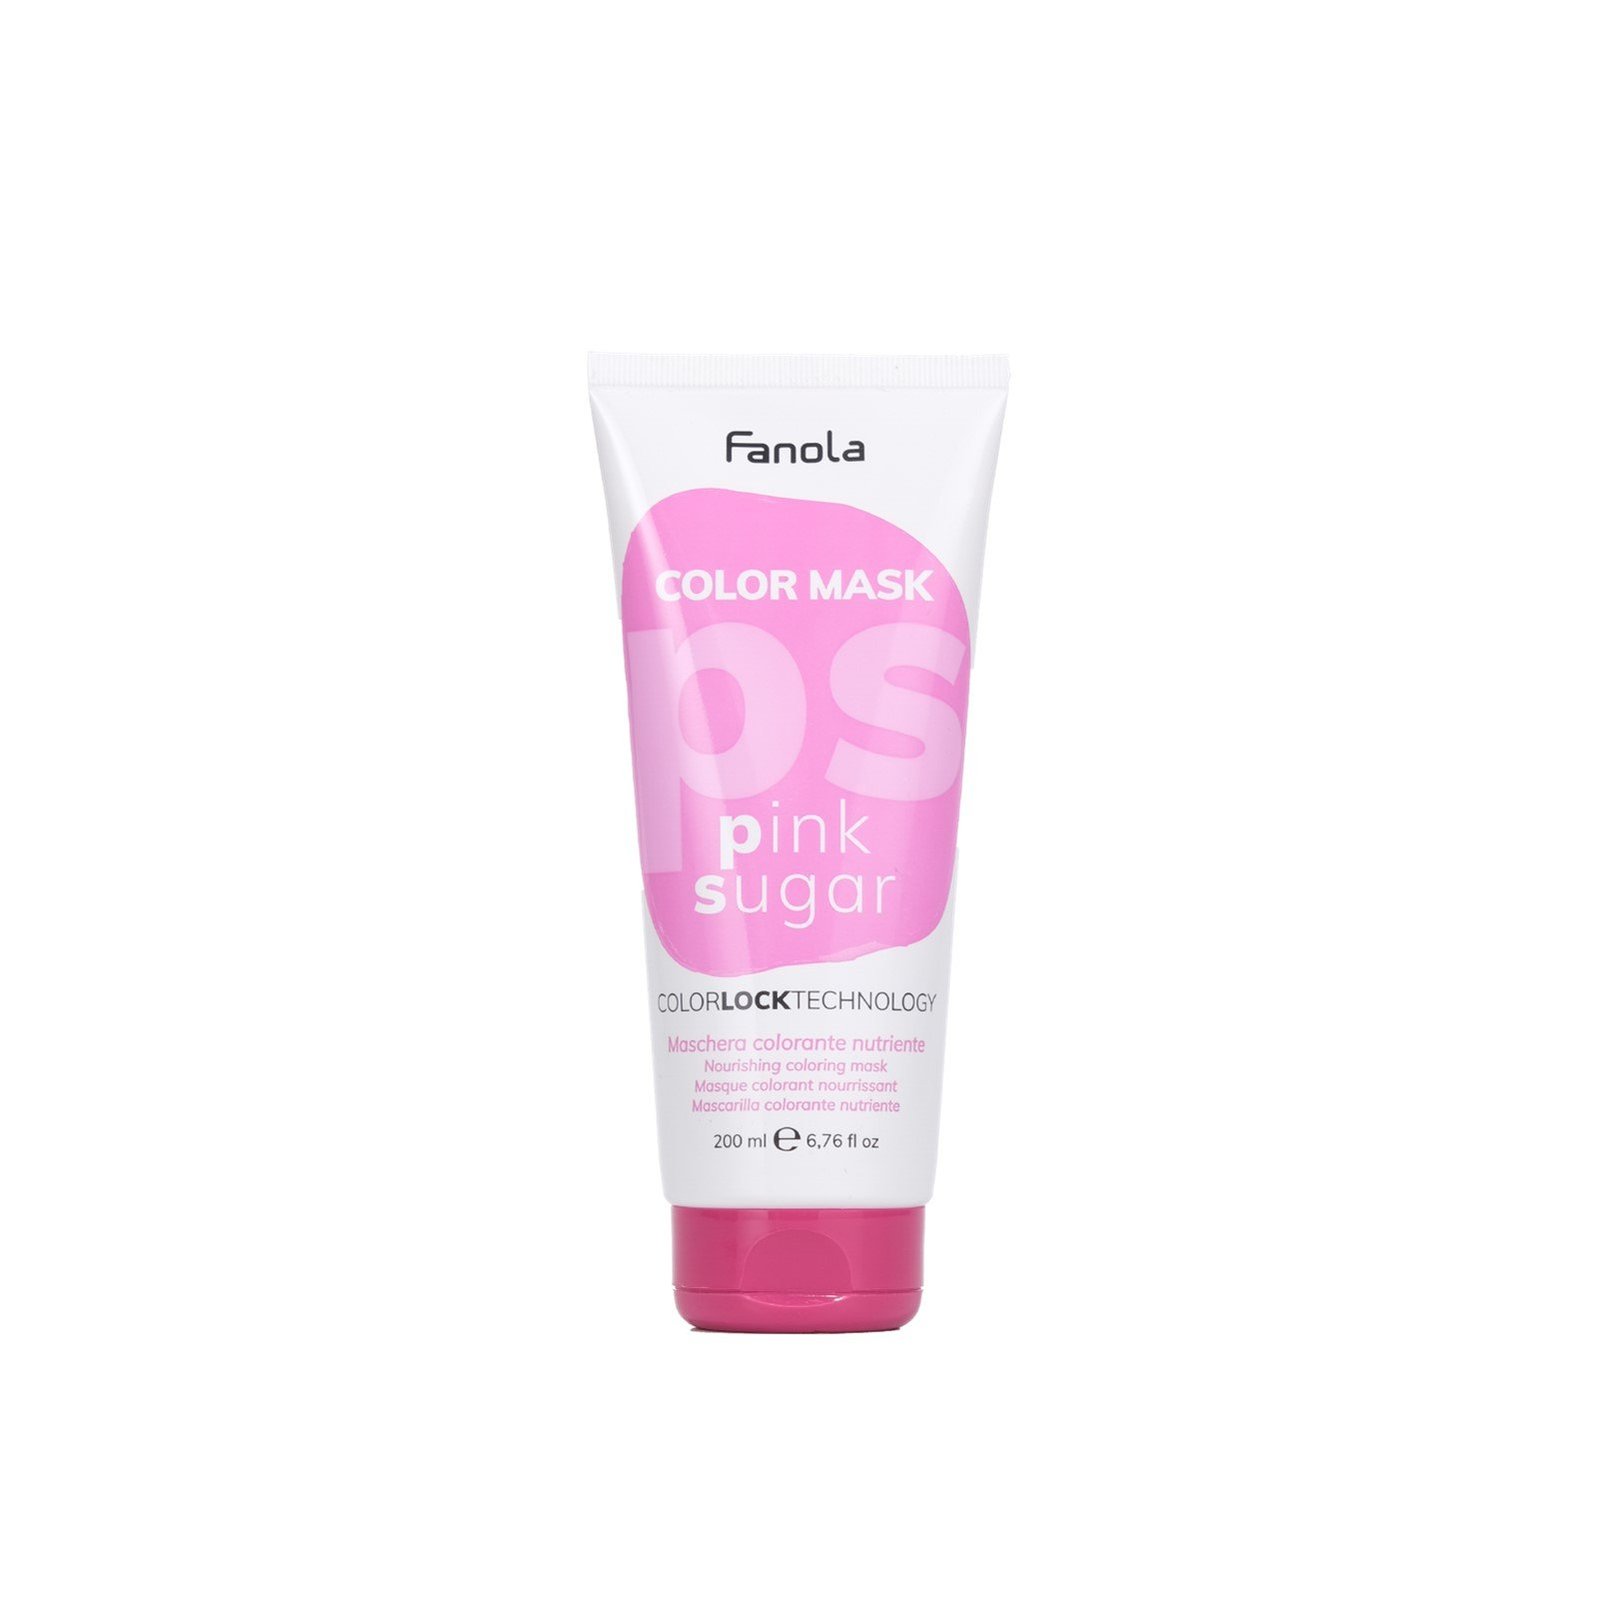 Fanola Color Mask Pink Sugar Nourishing Coloring Hair Mask 200ml (6.76 fl oz)